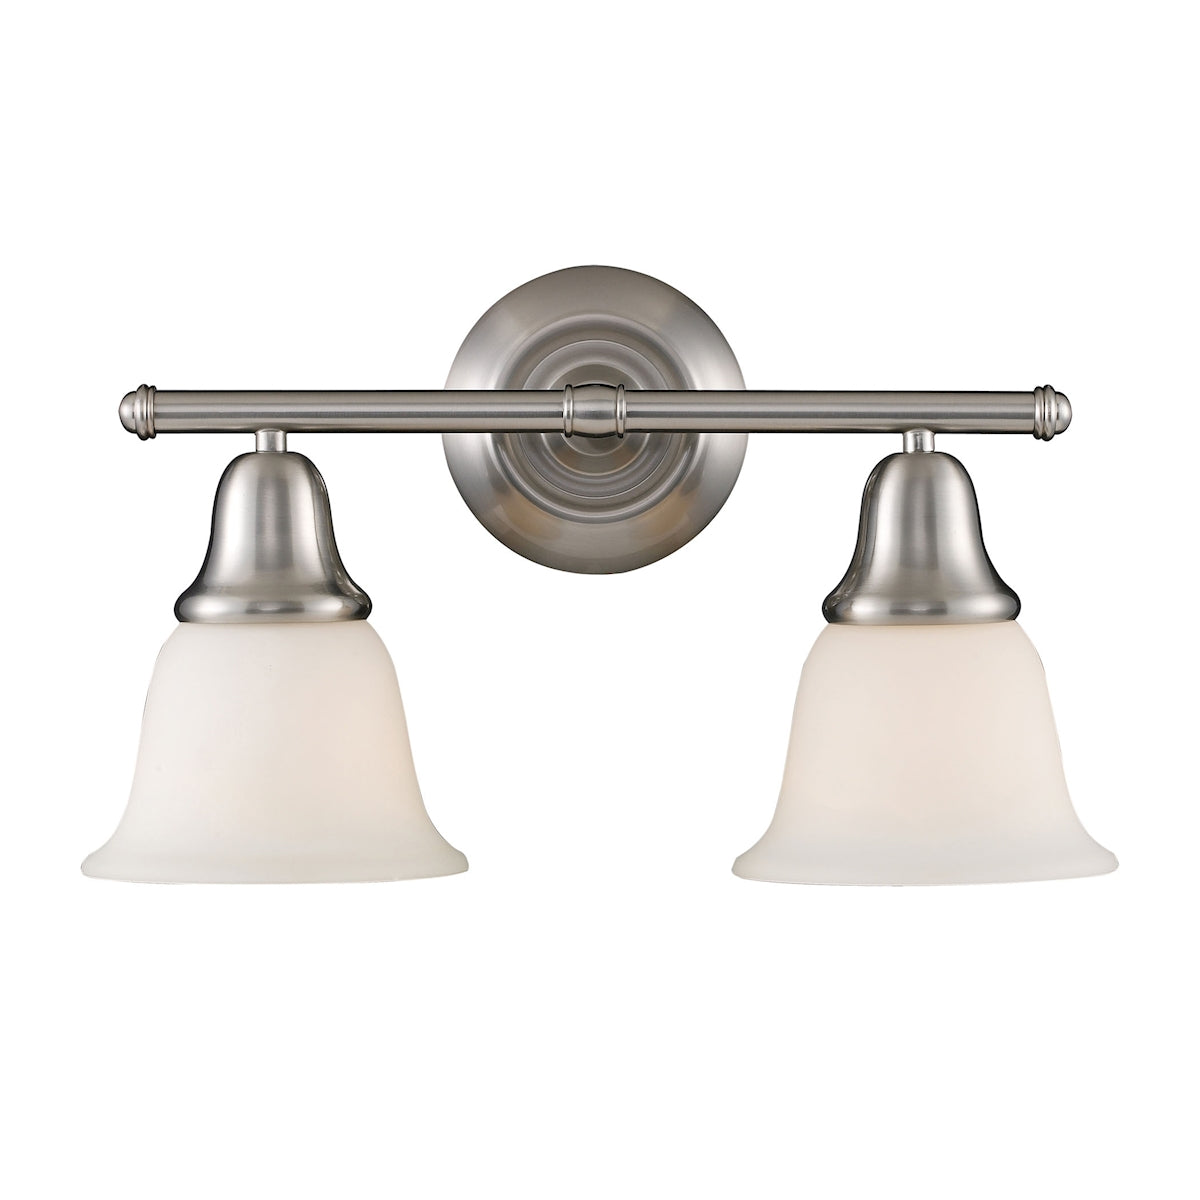 ELK Lighting 67021-2 Berwick 2-Light Vanity Lamp in Brushed Nickel with White Glass